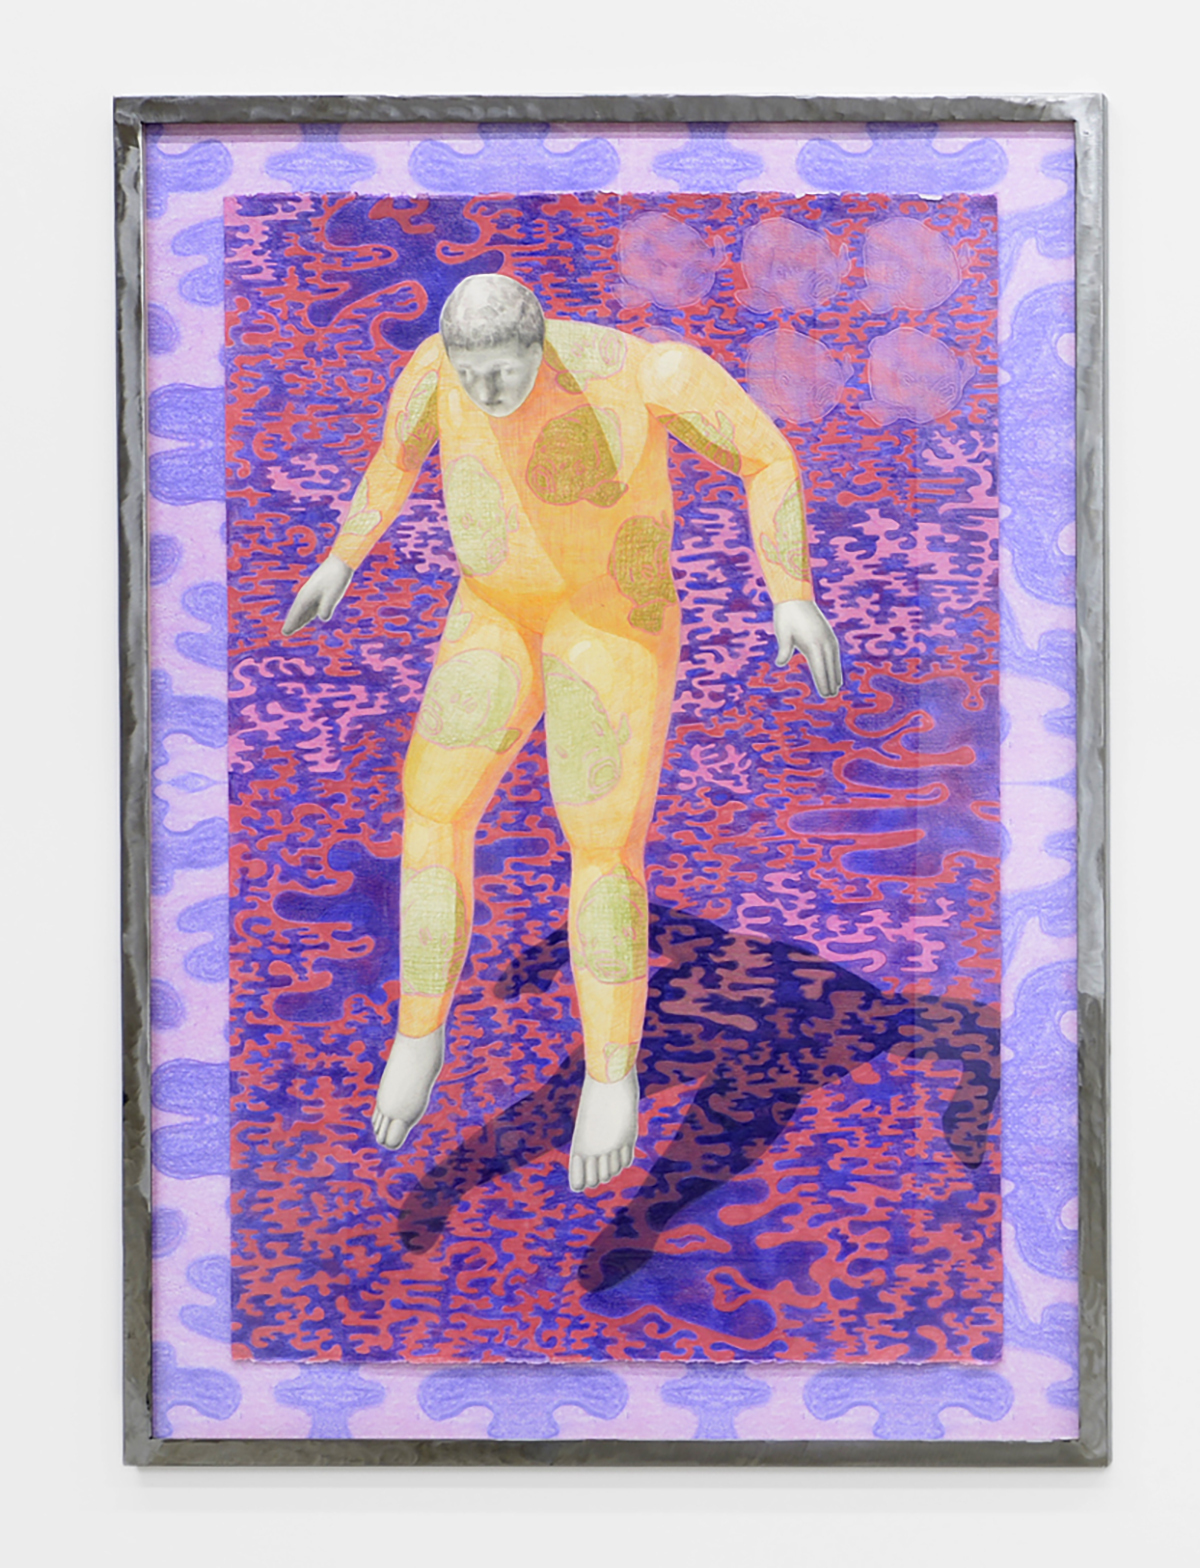 Lucas Kaiser, Fische, 2021,120 x 80 cm, Pencil and watercolour on paper, courtesy Galerie Kleindienst